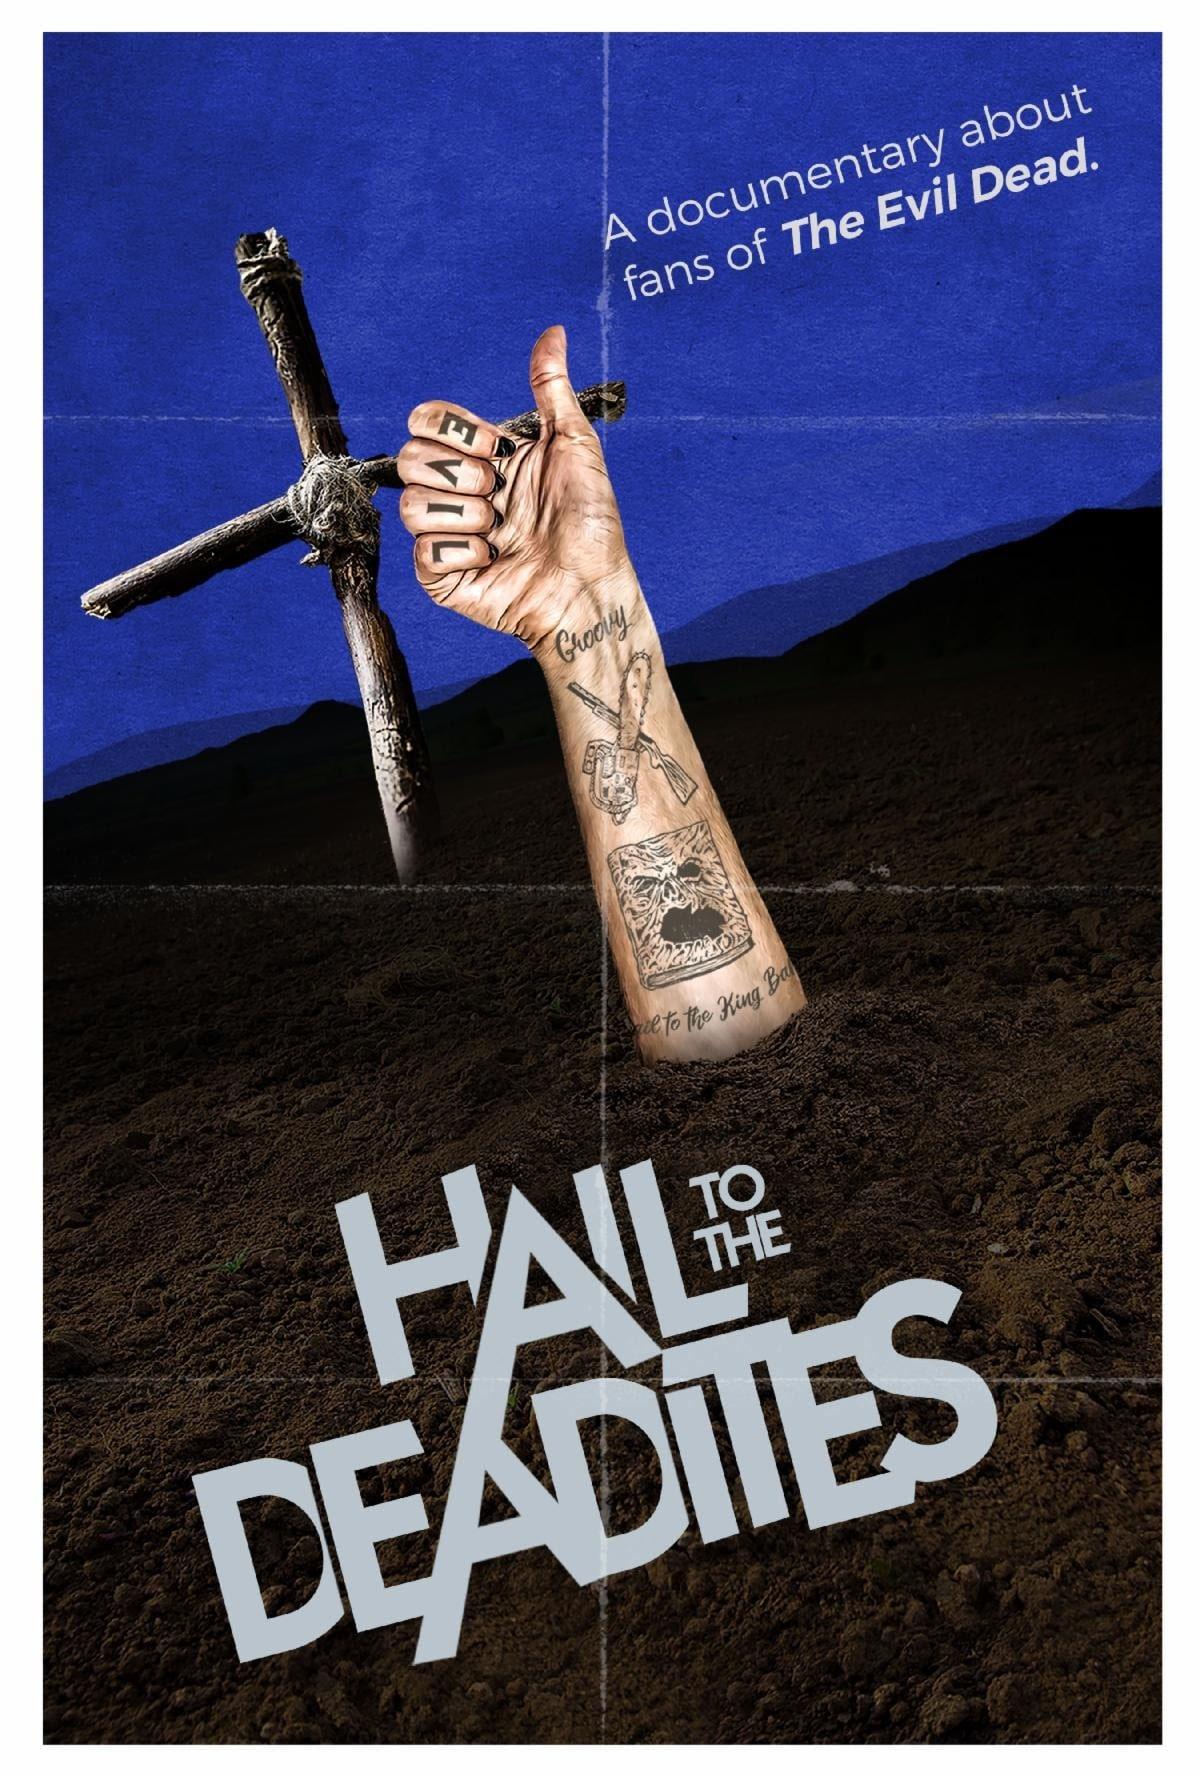 Hail to the Deadites poster